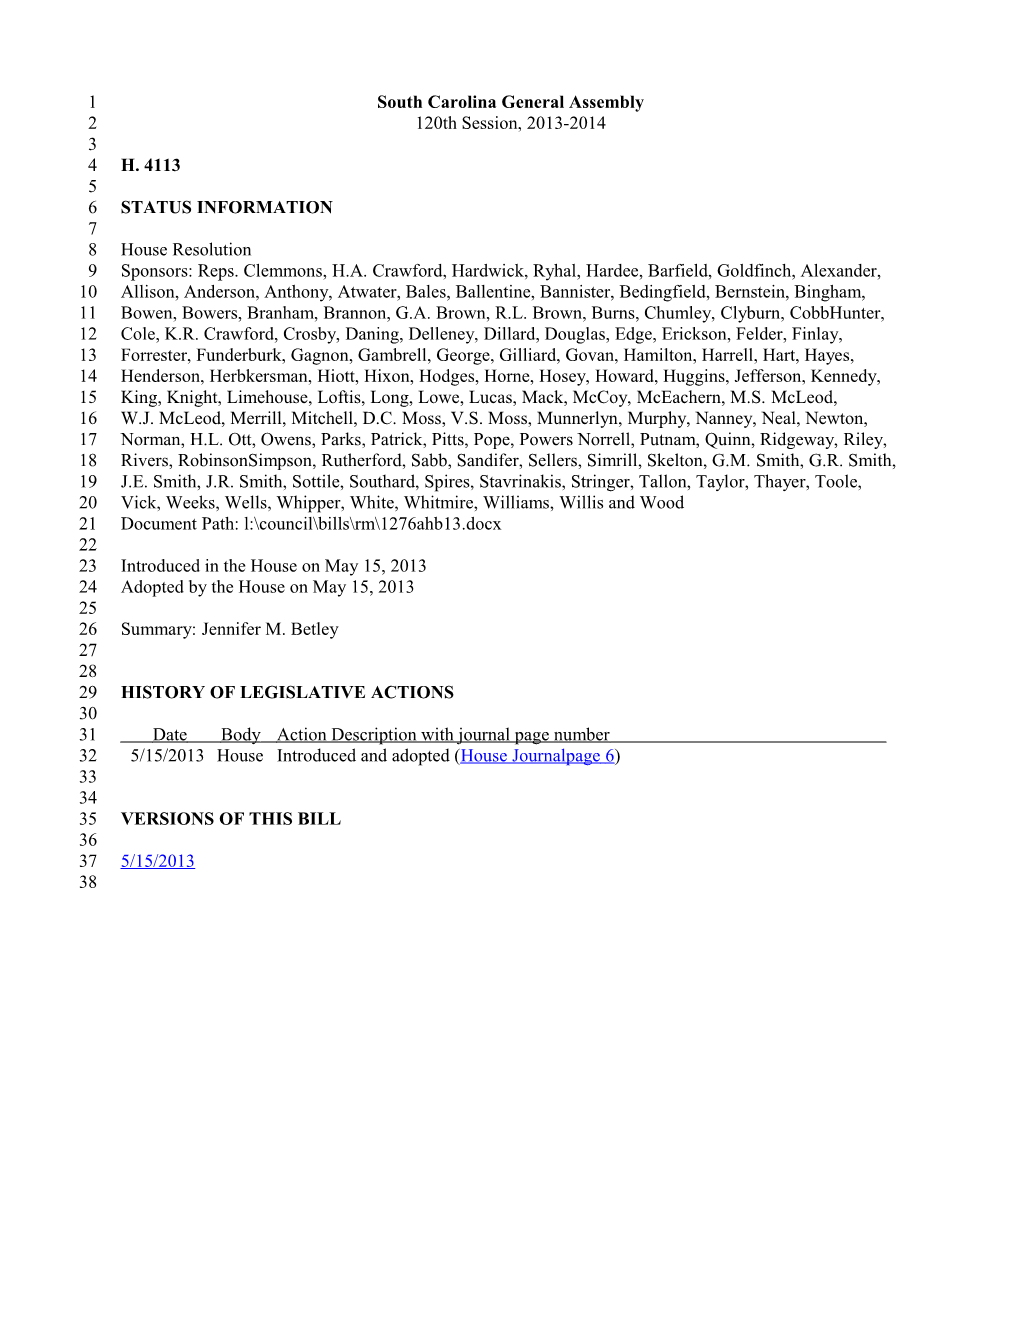 2013-2014 Bill 4113: Jennifer M. Betley - South Carolina Legislature Online